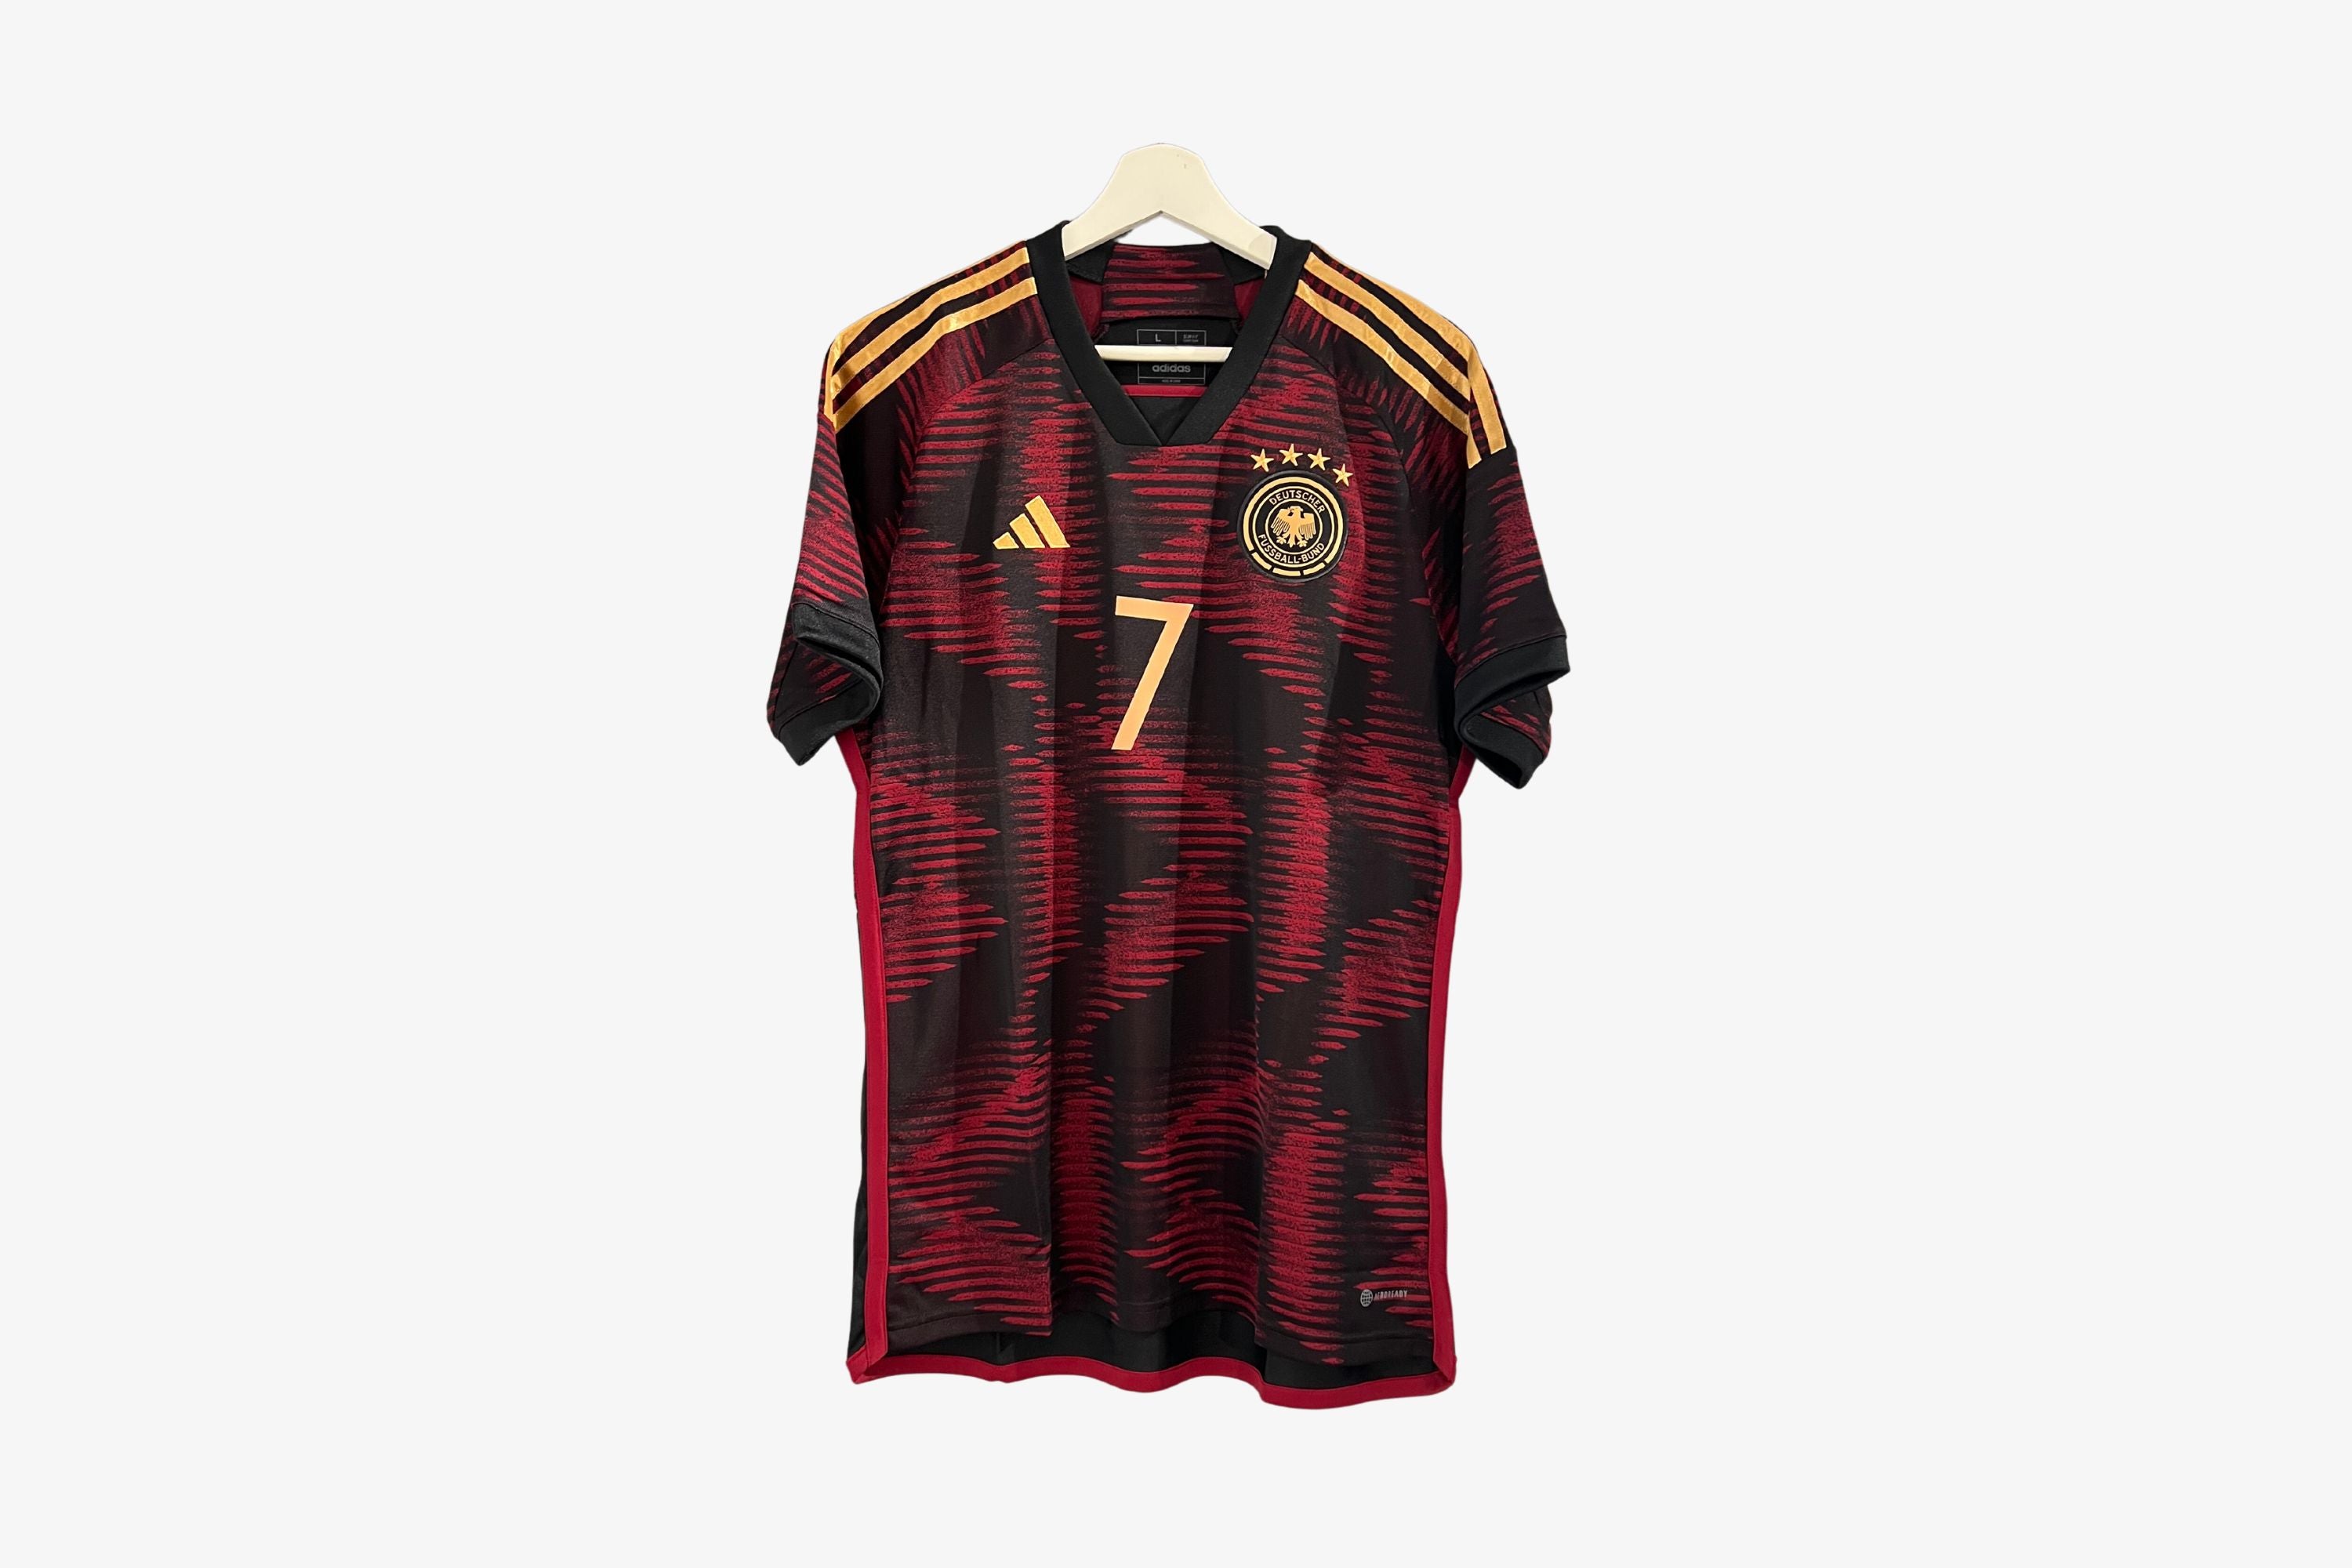 Adidas - Germany 2022/23 Away Football Shirt 'HAVERTZ' (Fan Edition)